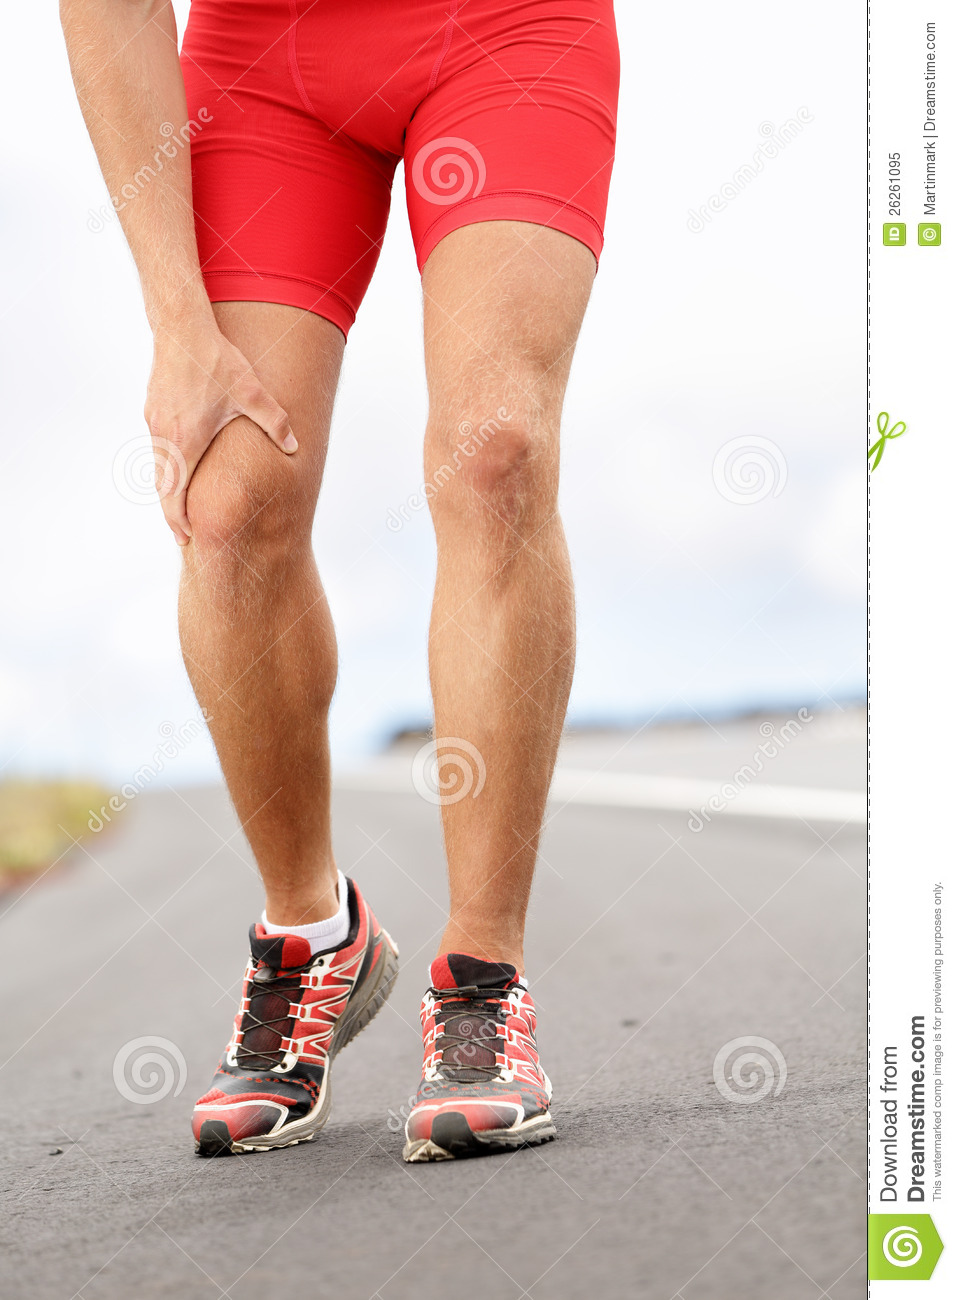 Knee Pain   Running Sport Injury  Male Runner Having Knee Problems